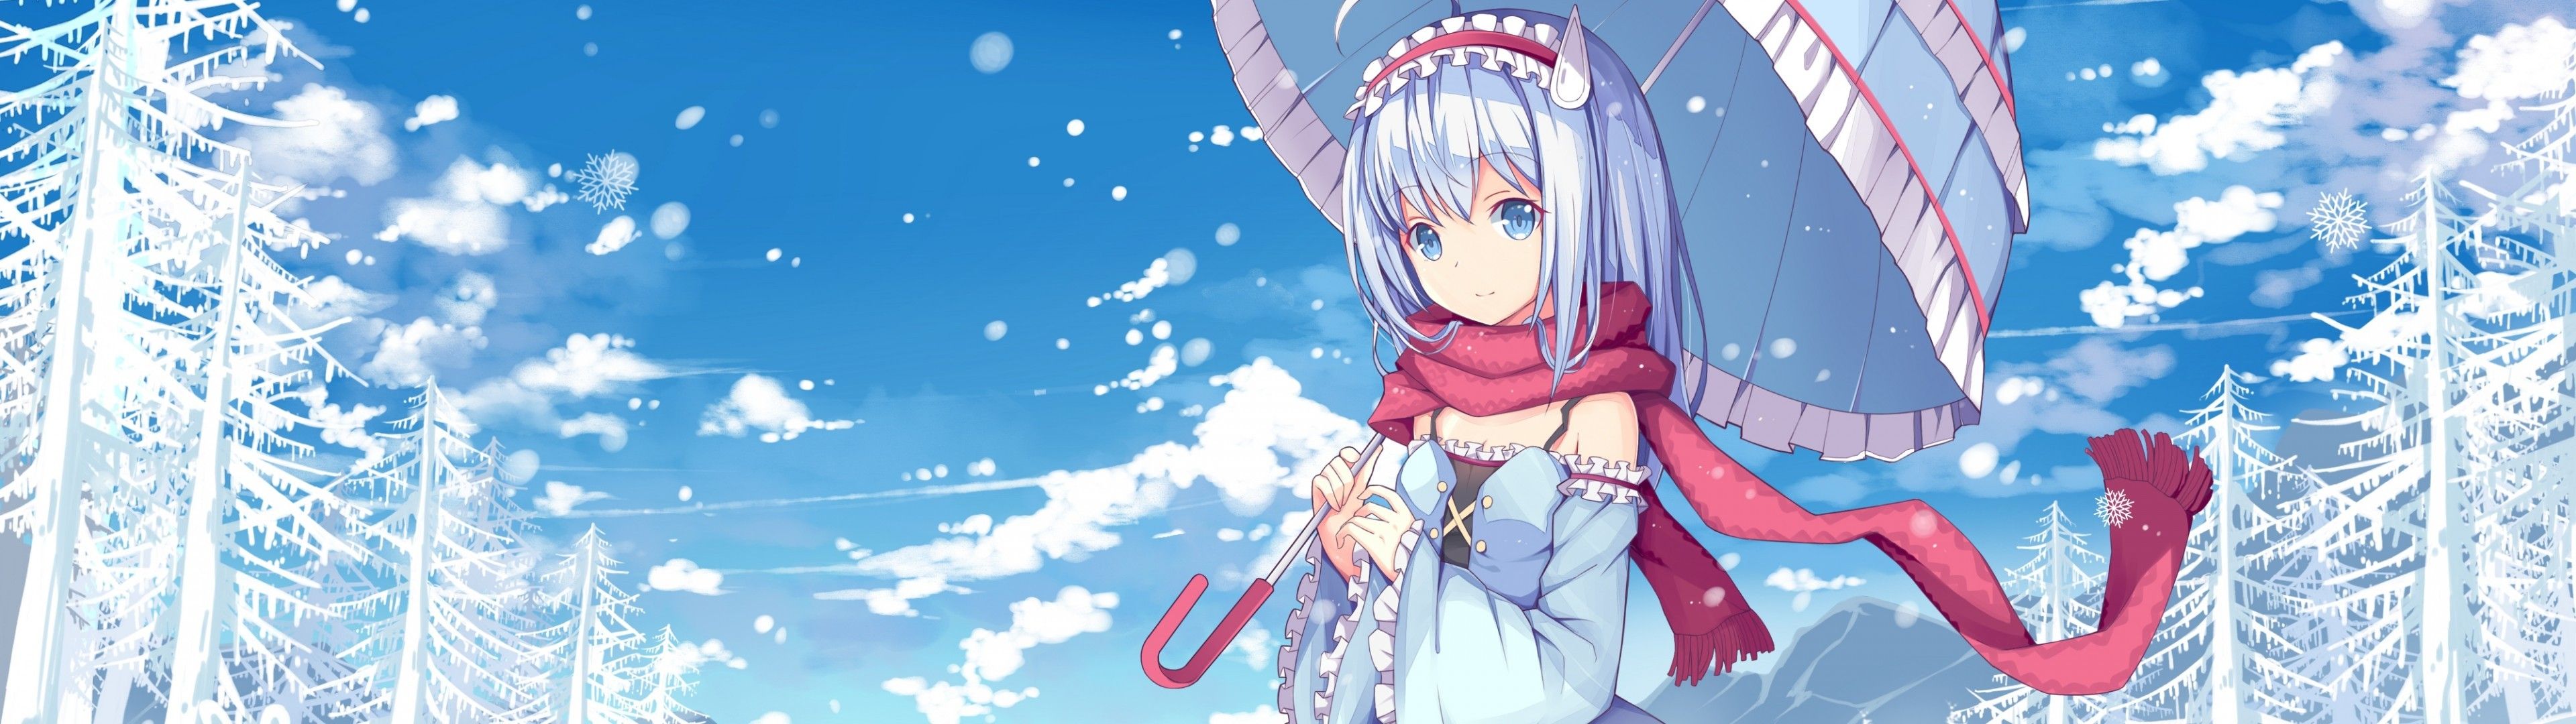 Download 3840x1080 Anime Girl, Blue Hair, Snow, Umbrella, Scarf, Snowman, Clouds Wallpaper